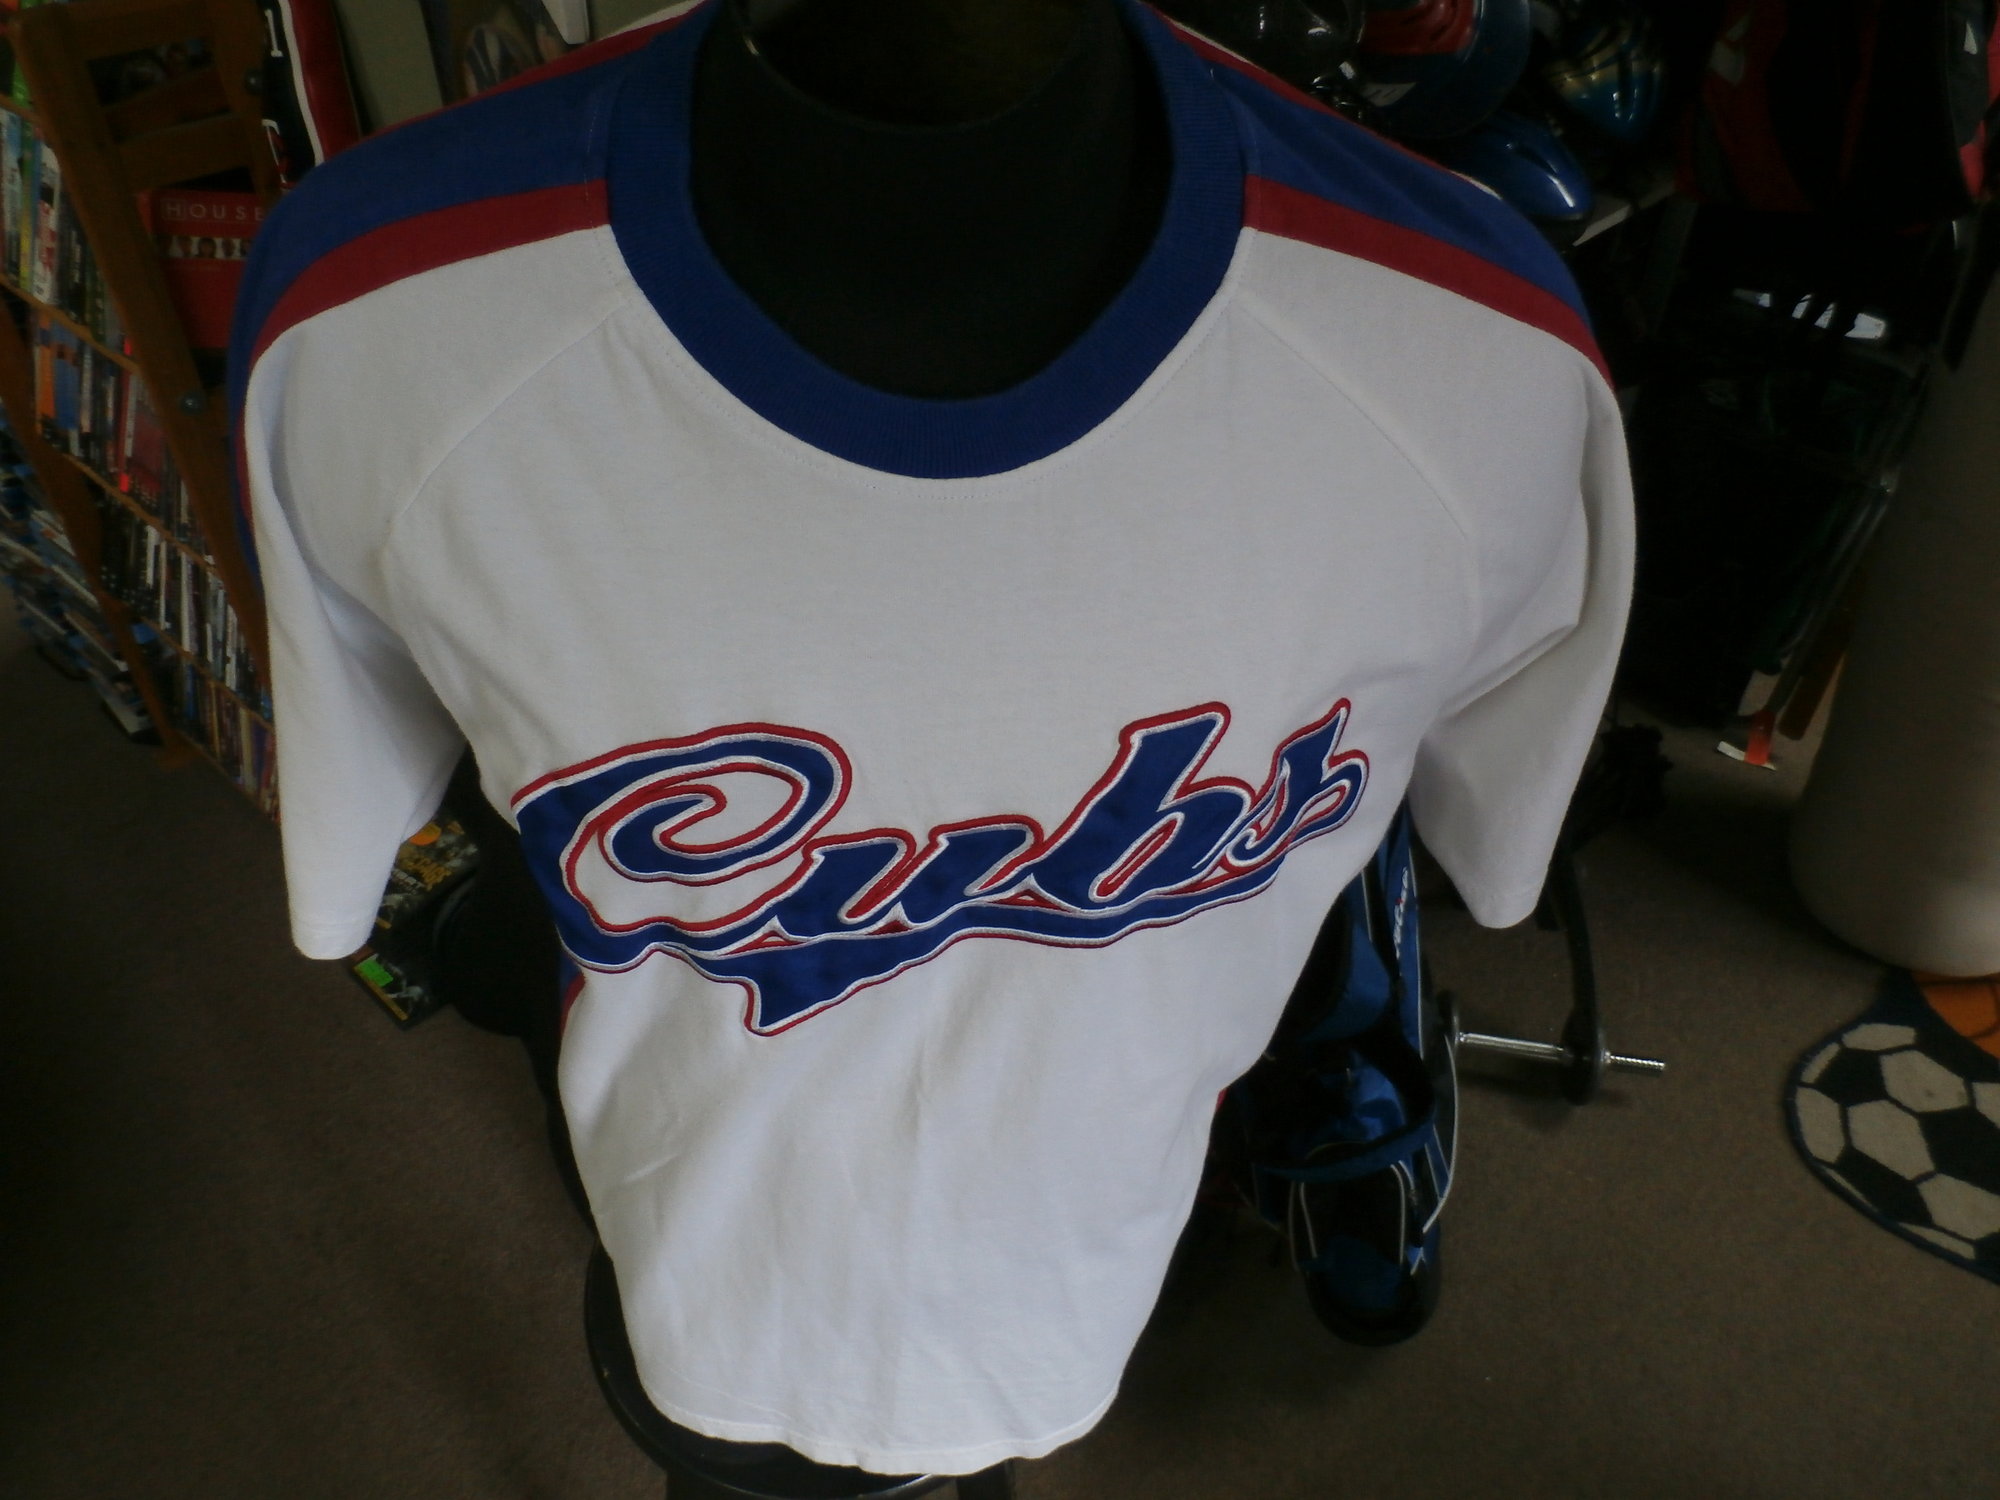 Plus Sizes Chicago Cubs Jerseys, Cubs Baseball Jersey, Uniforms